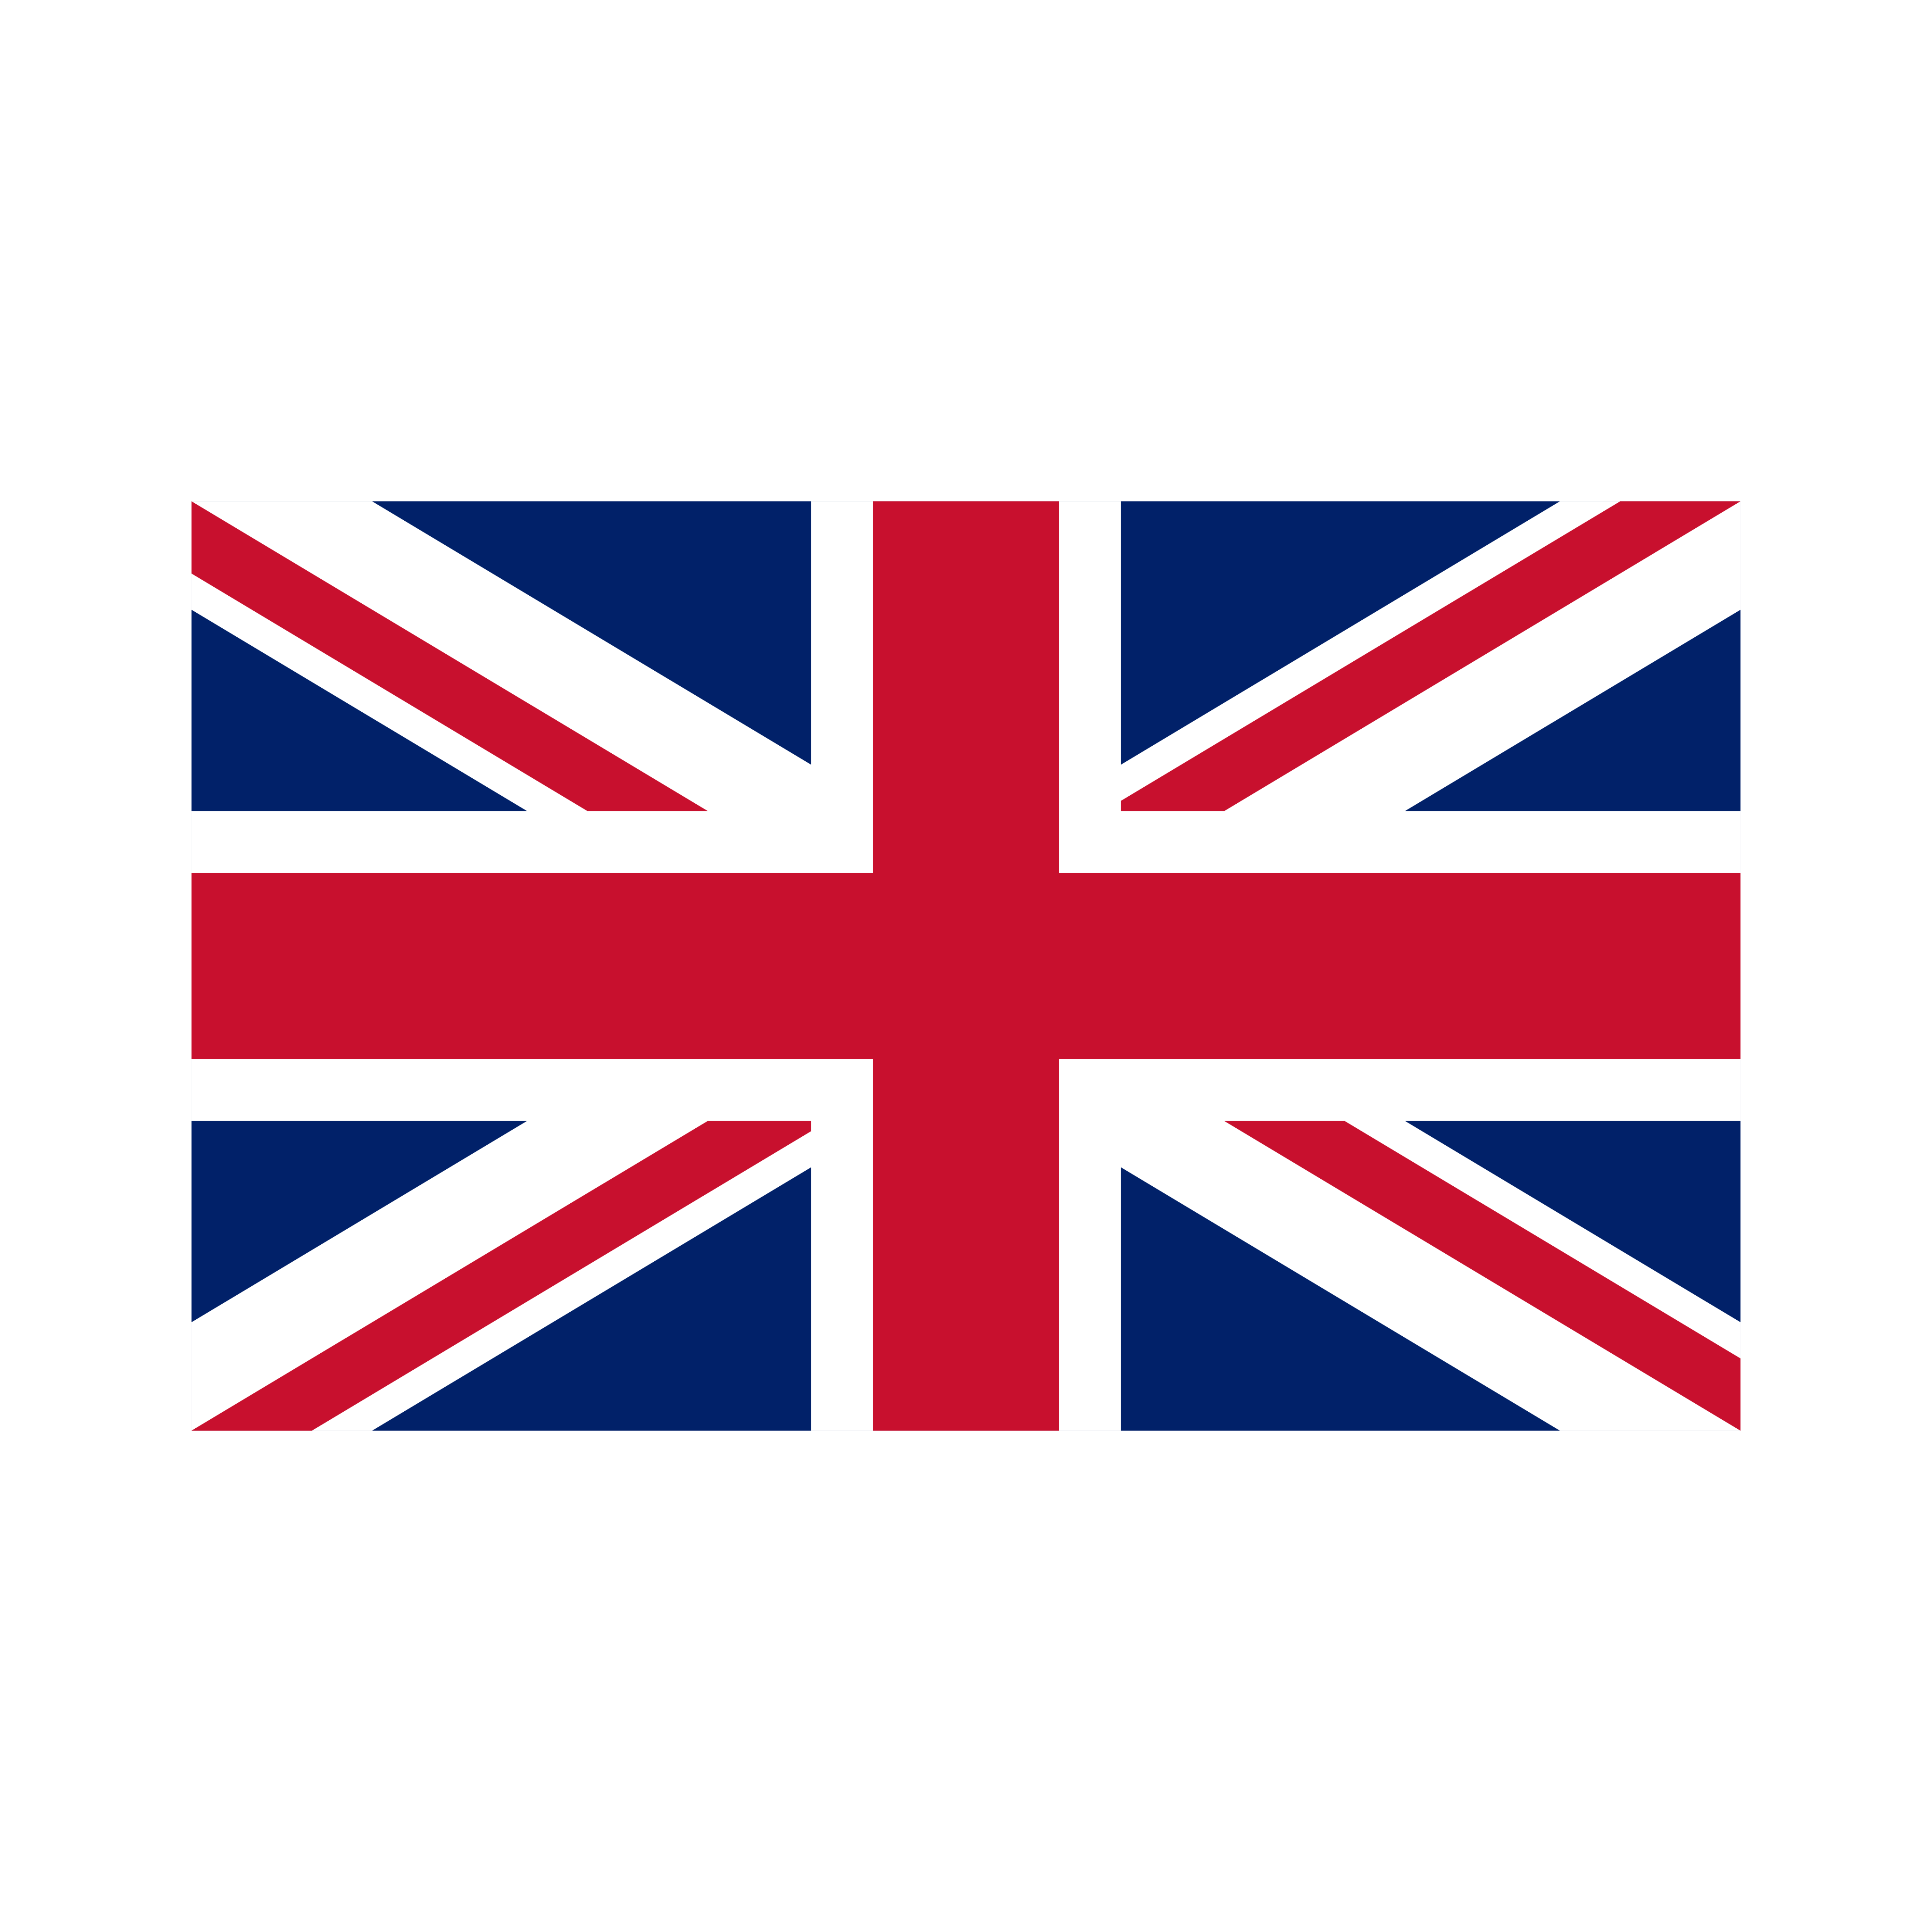 bandeira united kingdom flag 0 - Flag of the United Kingdom